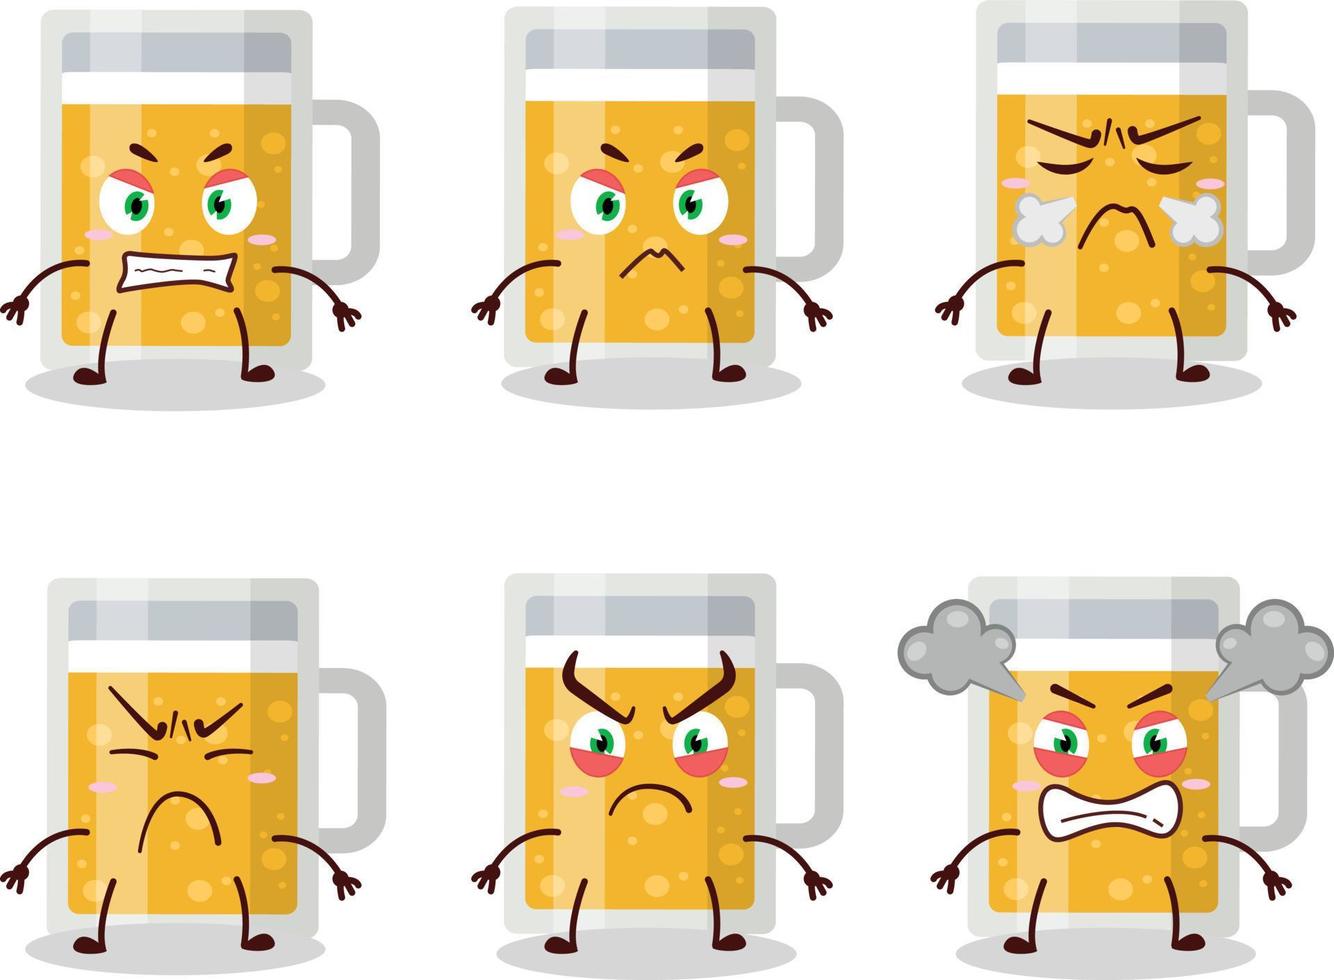 Mug of beer cartoon character with various angry expressions vector